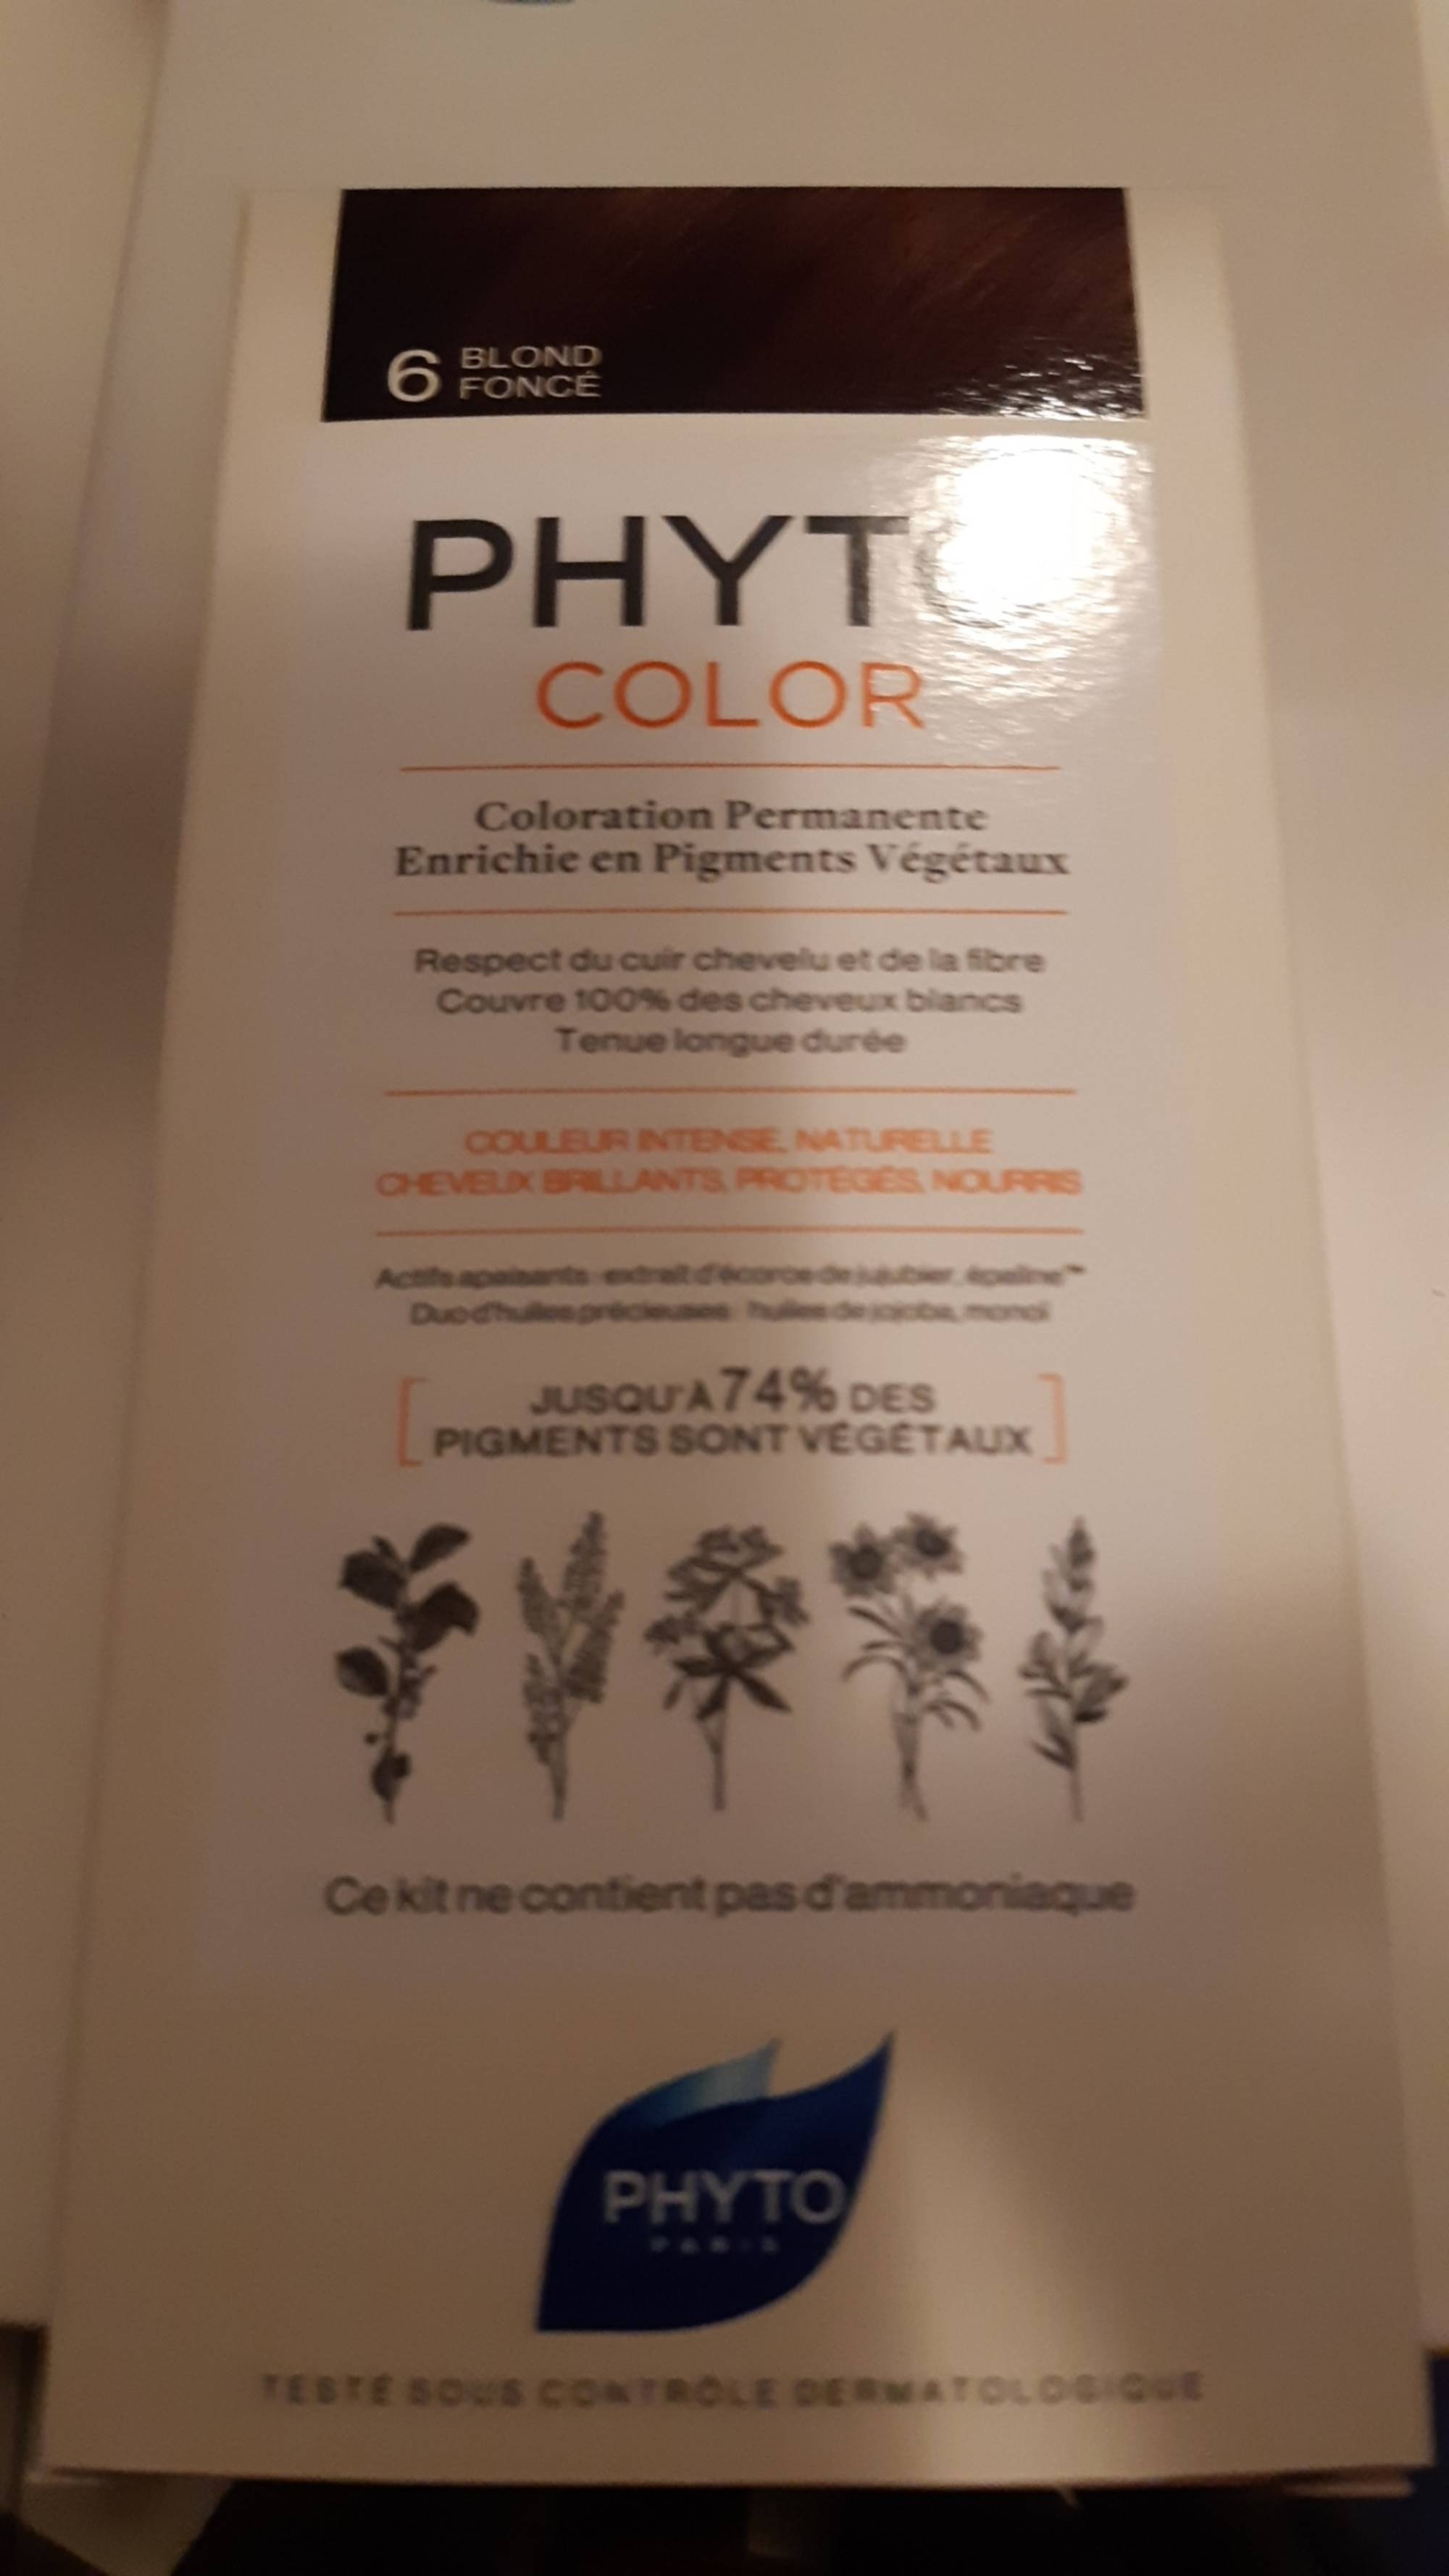 PHYTO - Phyto color - Coloration permanente 6 blond foncé